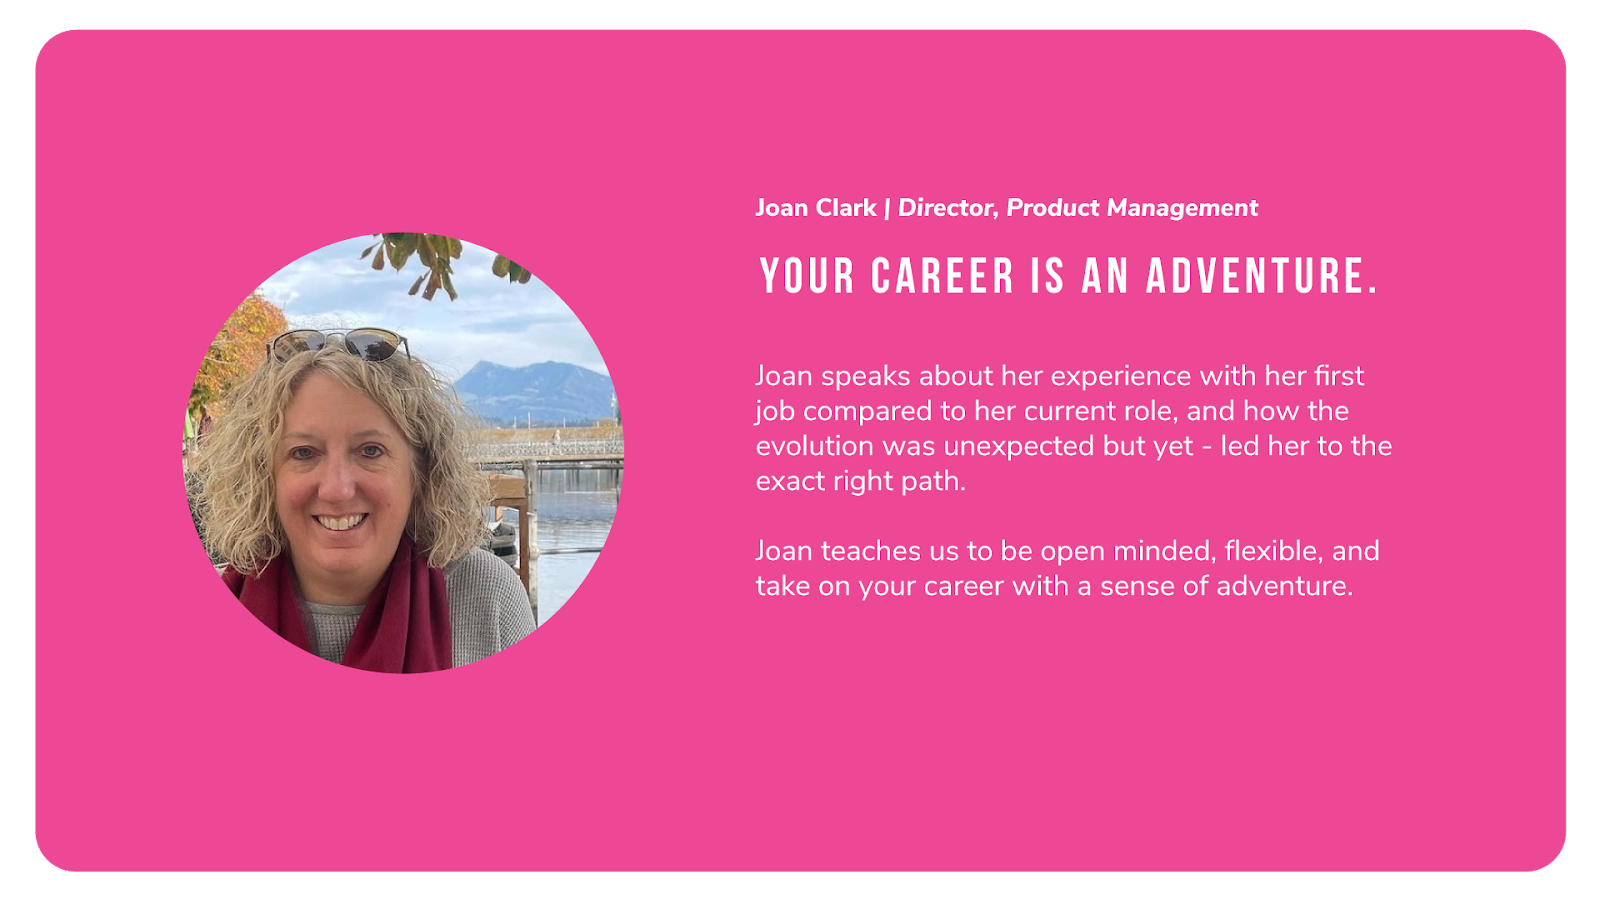 Joan Clark of Alkami says: Your career is an adventure